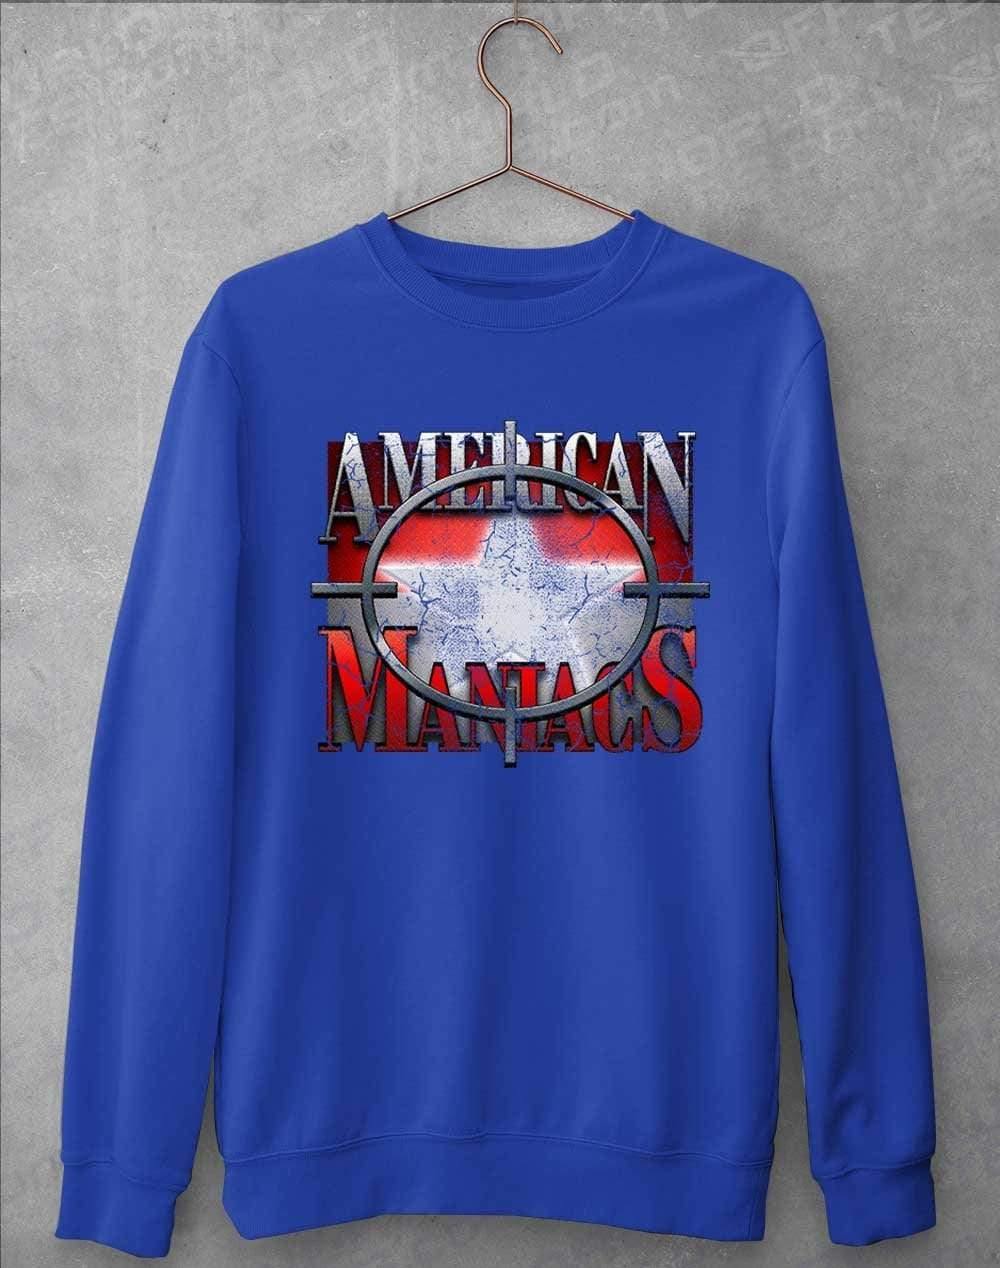 American Maniacs - Sweatshirt  - Off World Tees